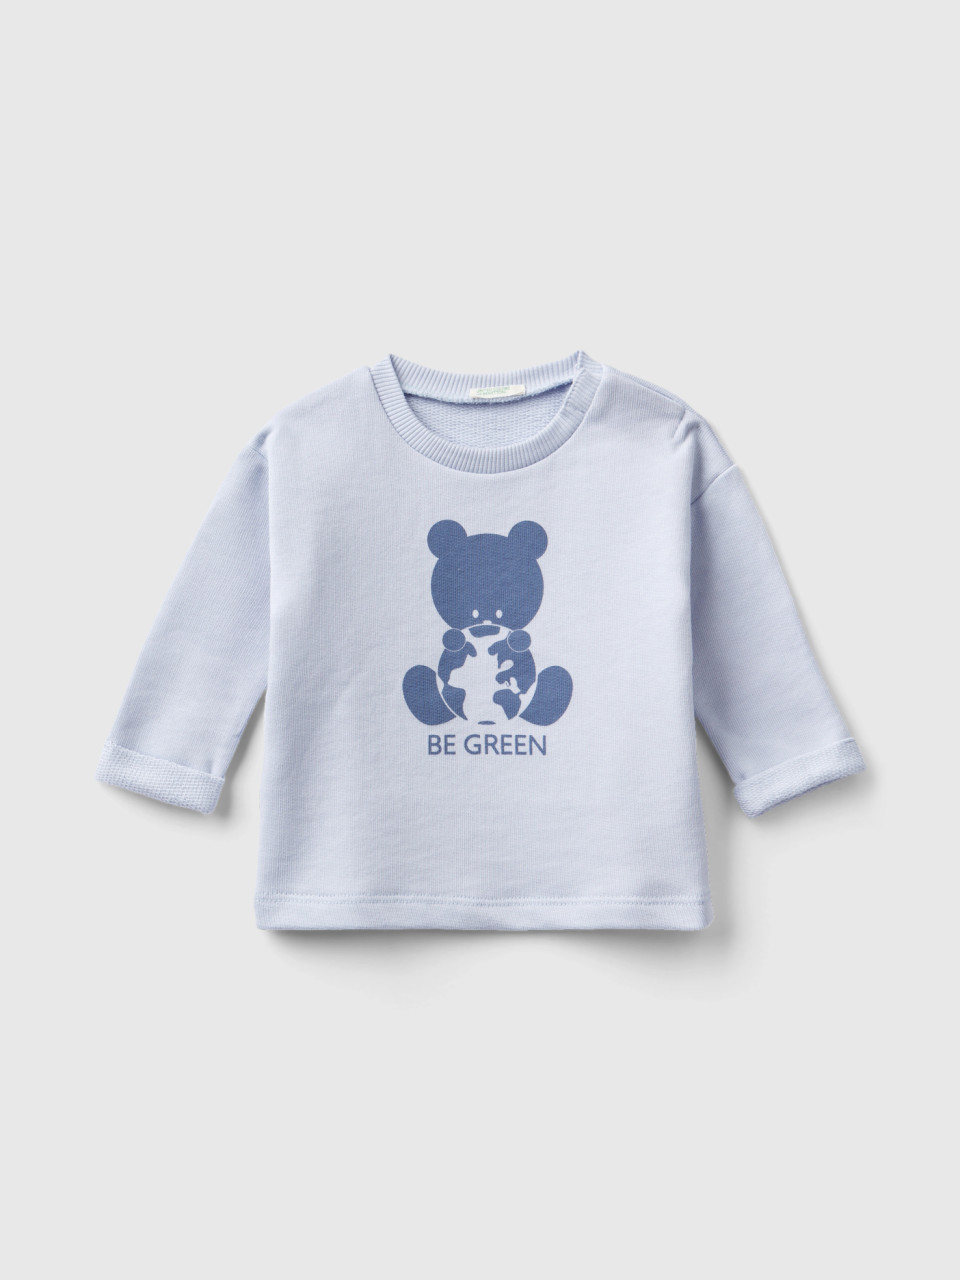 Benetton, Organic Cotton Sweatshirt With Print, Sky Blue, Kids